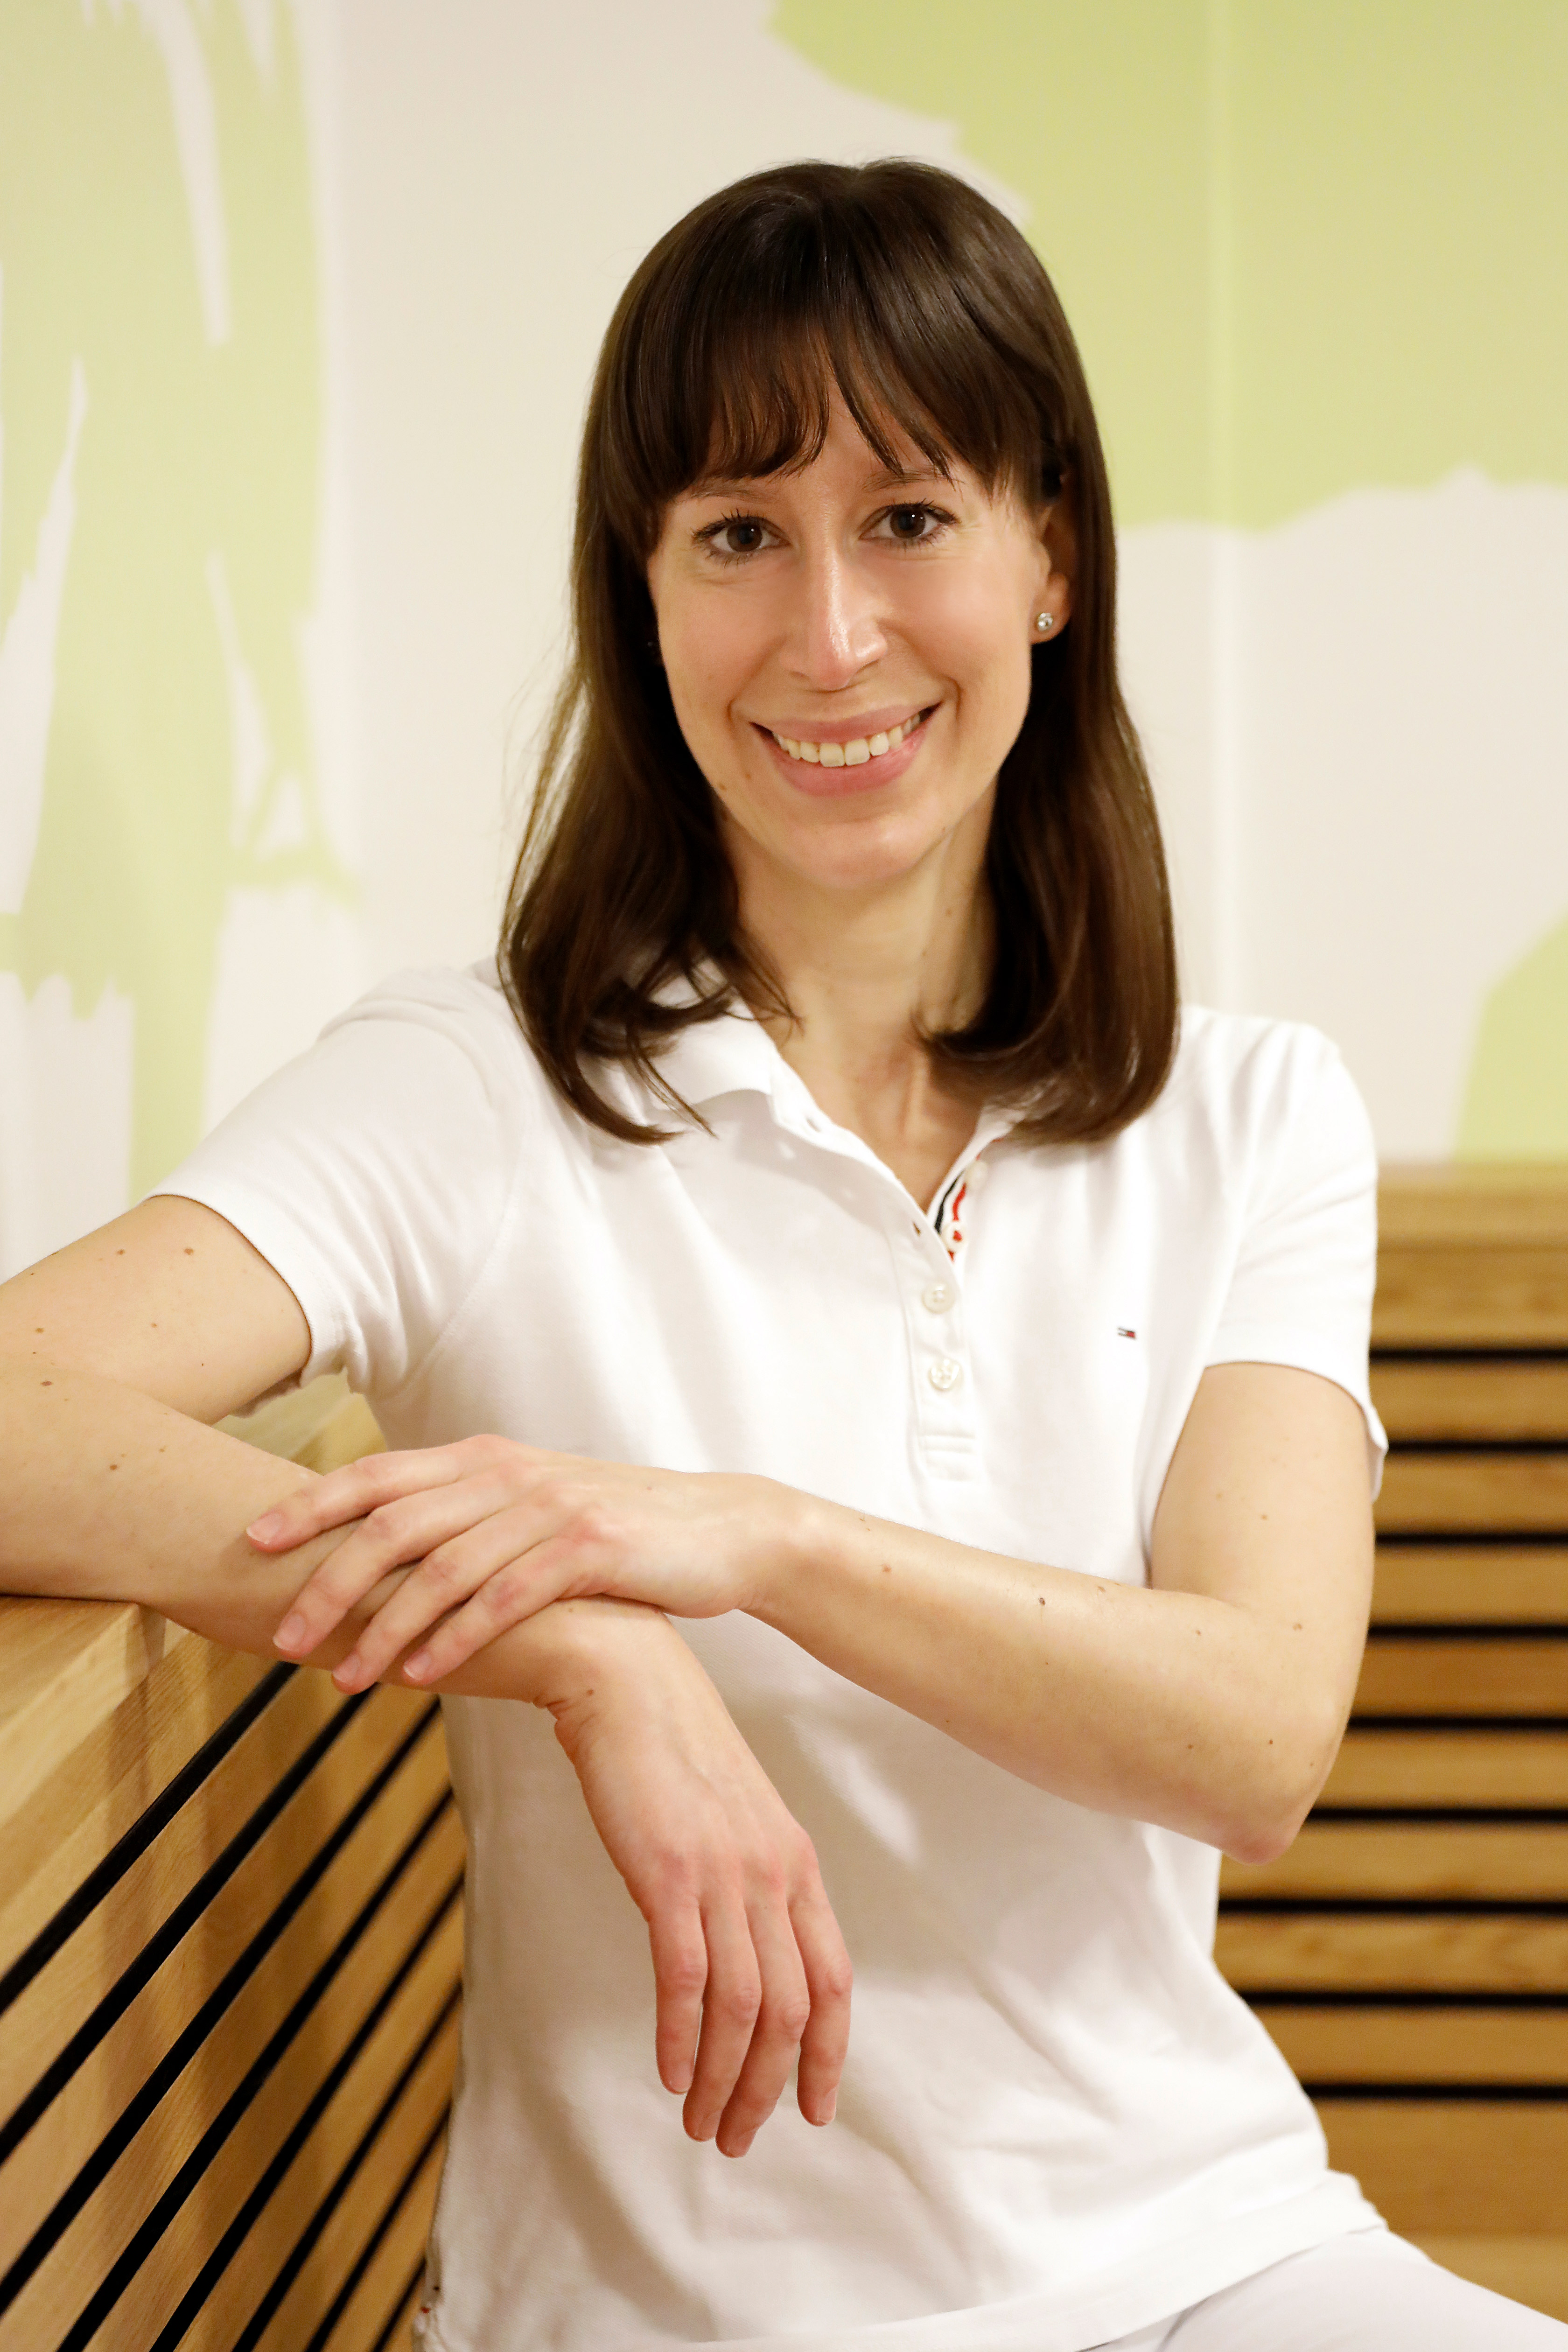 Dr. Franziska Seufert